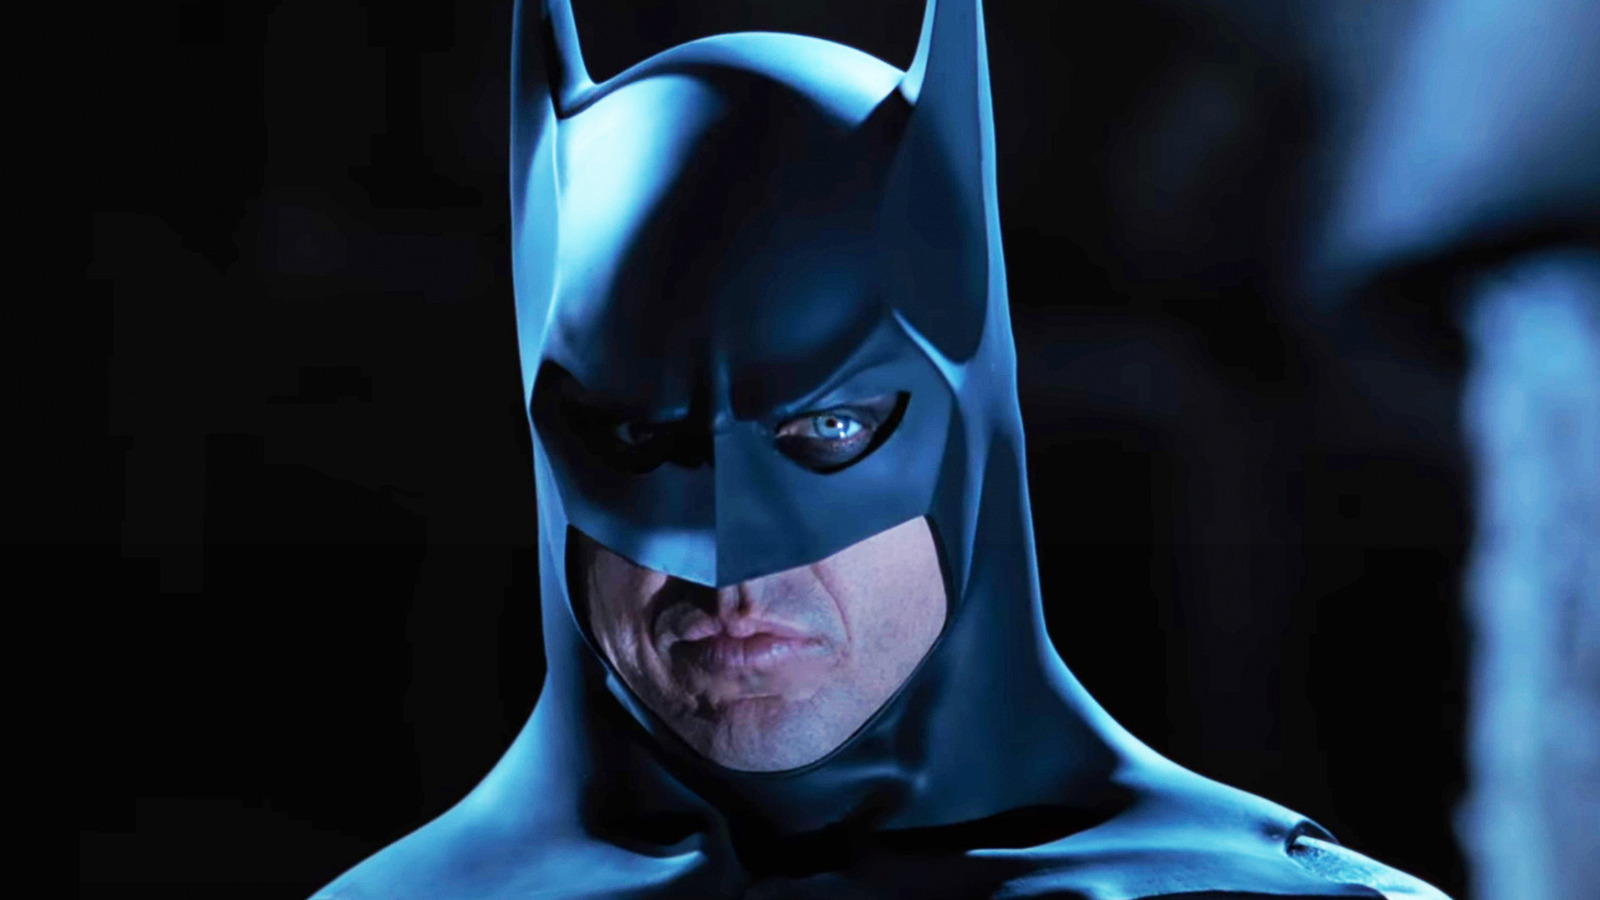 The Flash' final trailer shows Michael Keaton's iconic Batman